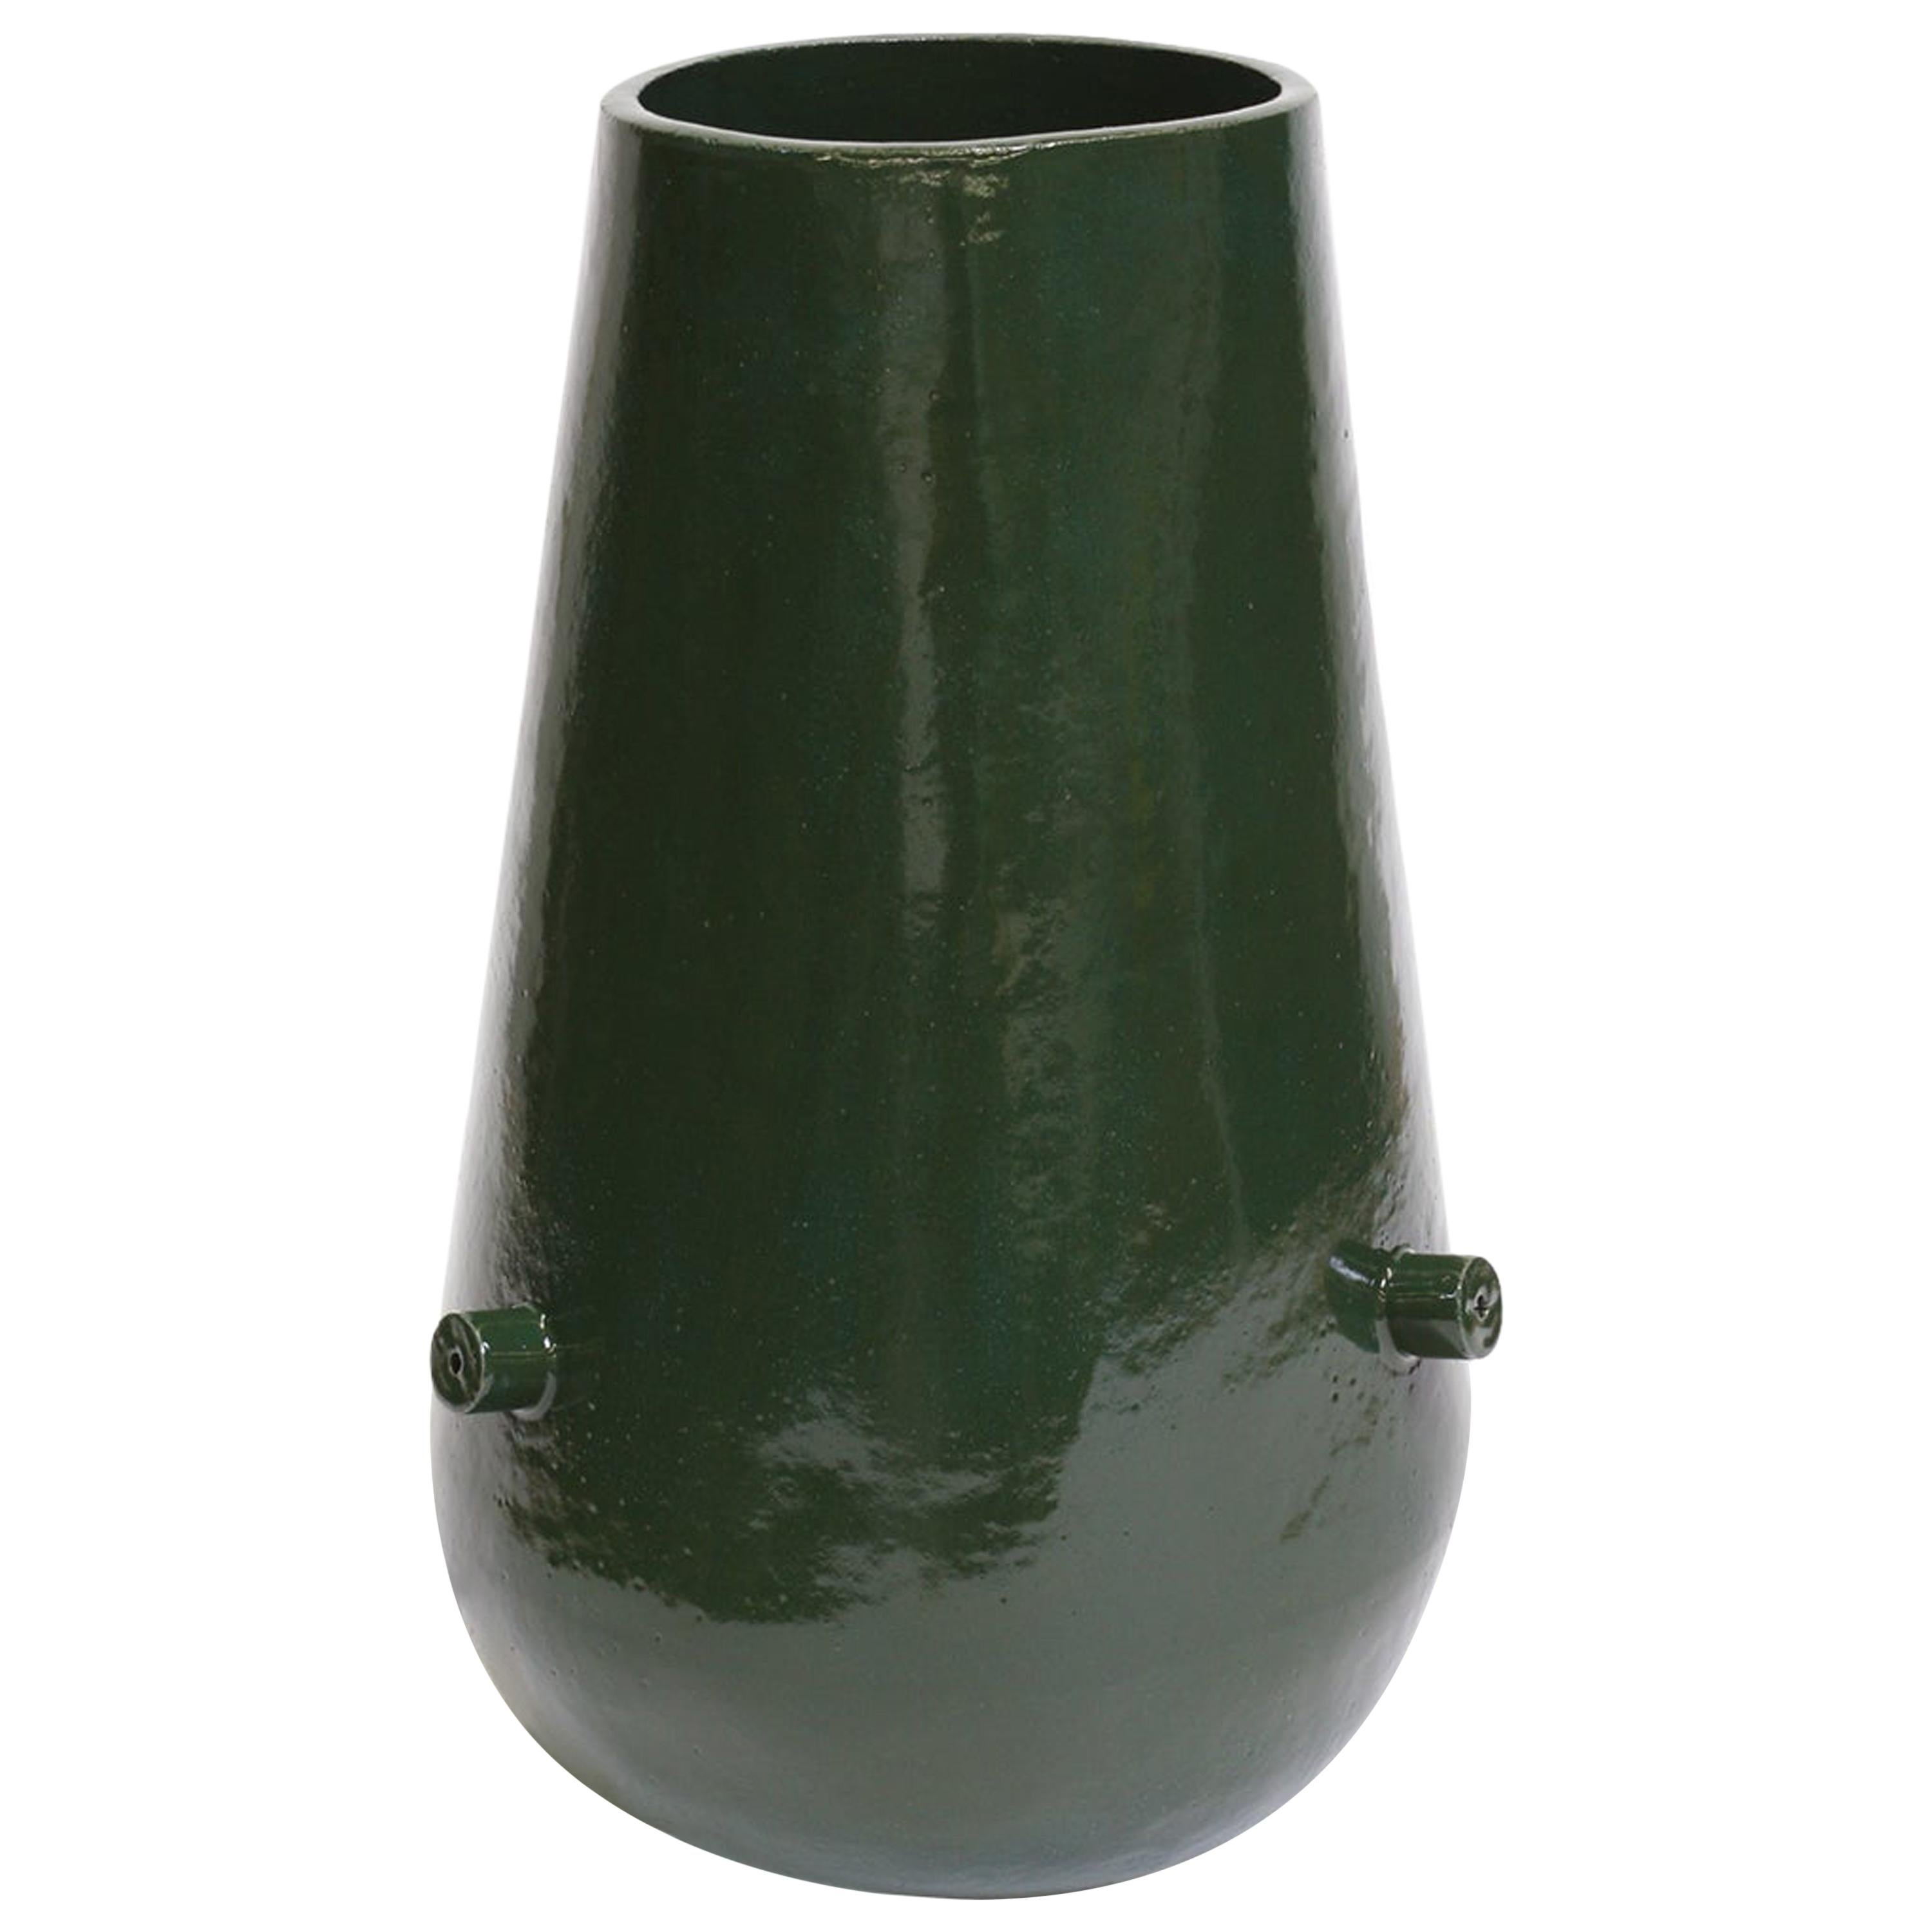 Giant Bowl Bottom Contemporary Ceramic Vase in Chrome Green